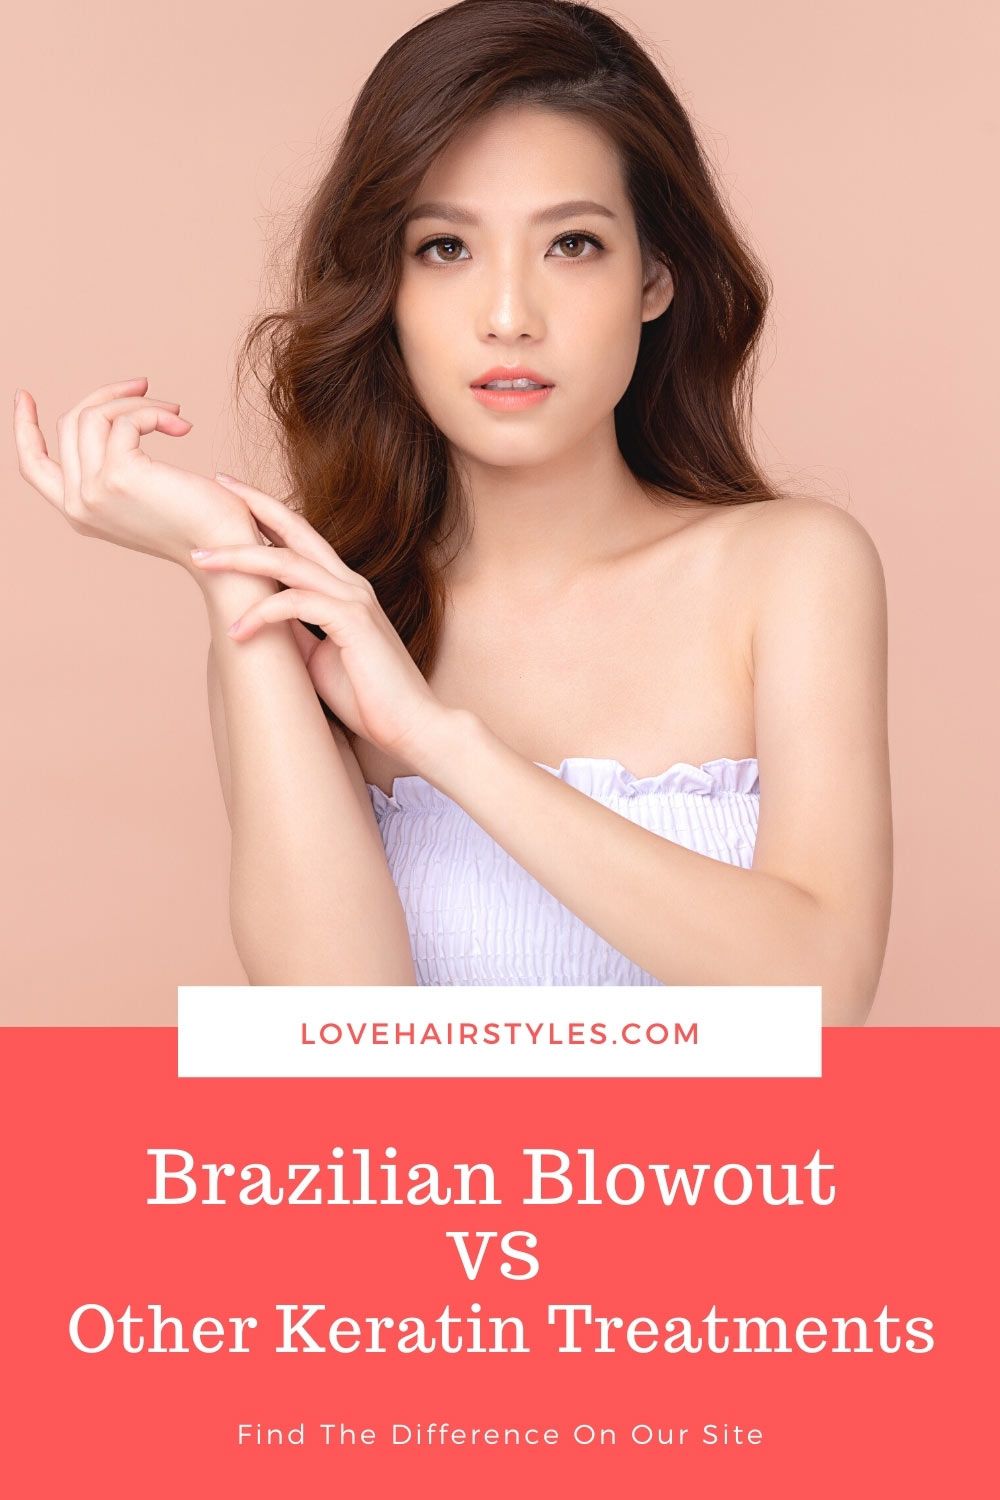 Brazilian Blowout VS Other Keratin Treatments